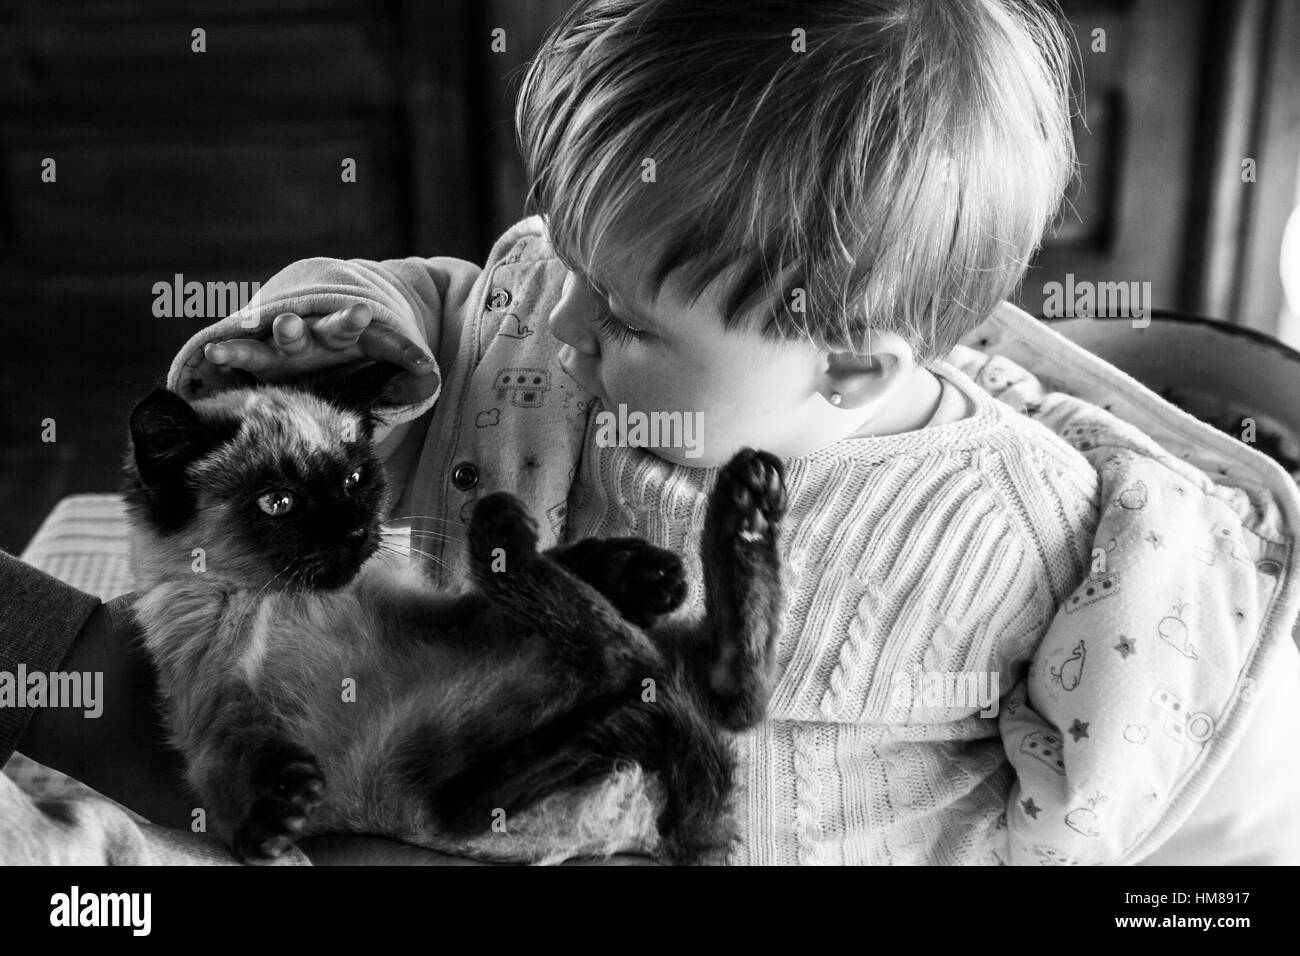 Young Child Petting Kitten Stock Photo